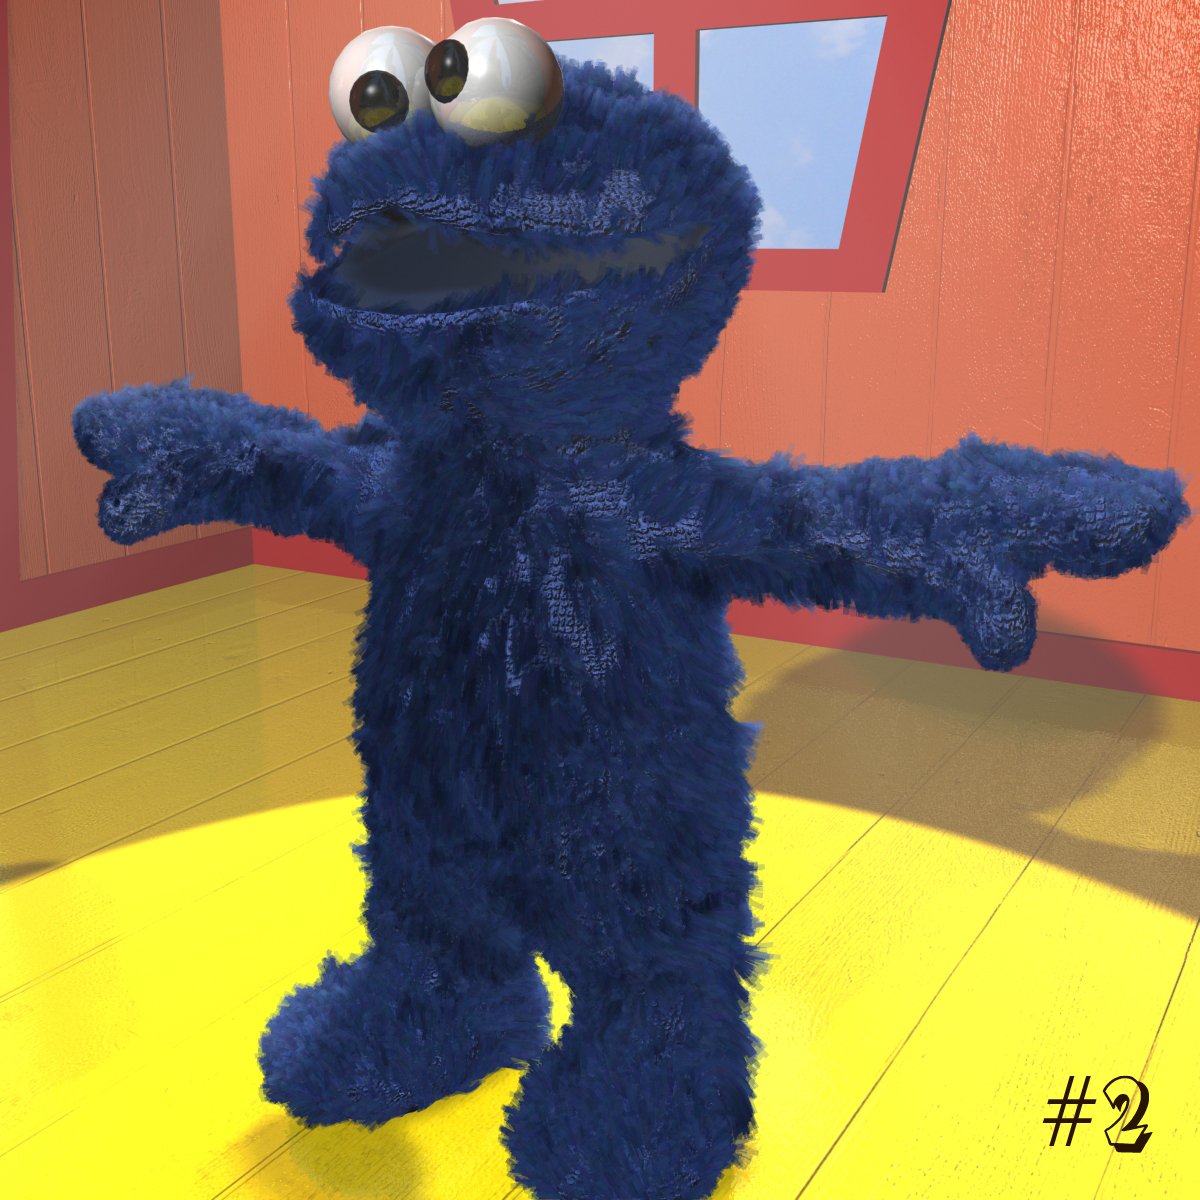 cookie monster dancing gif